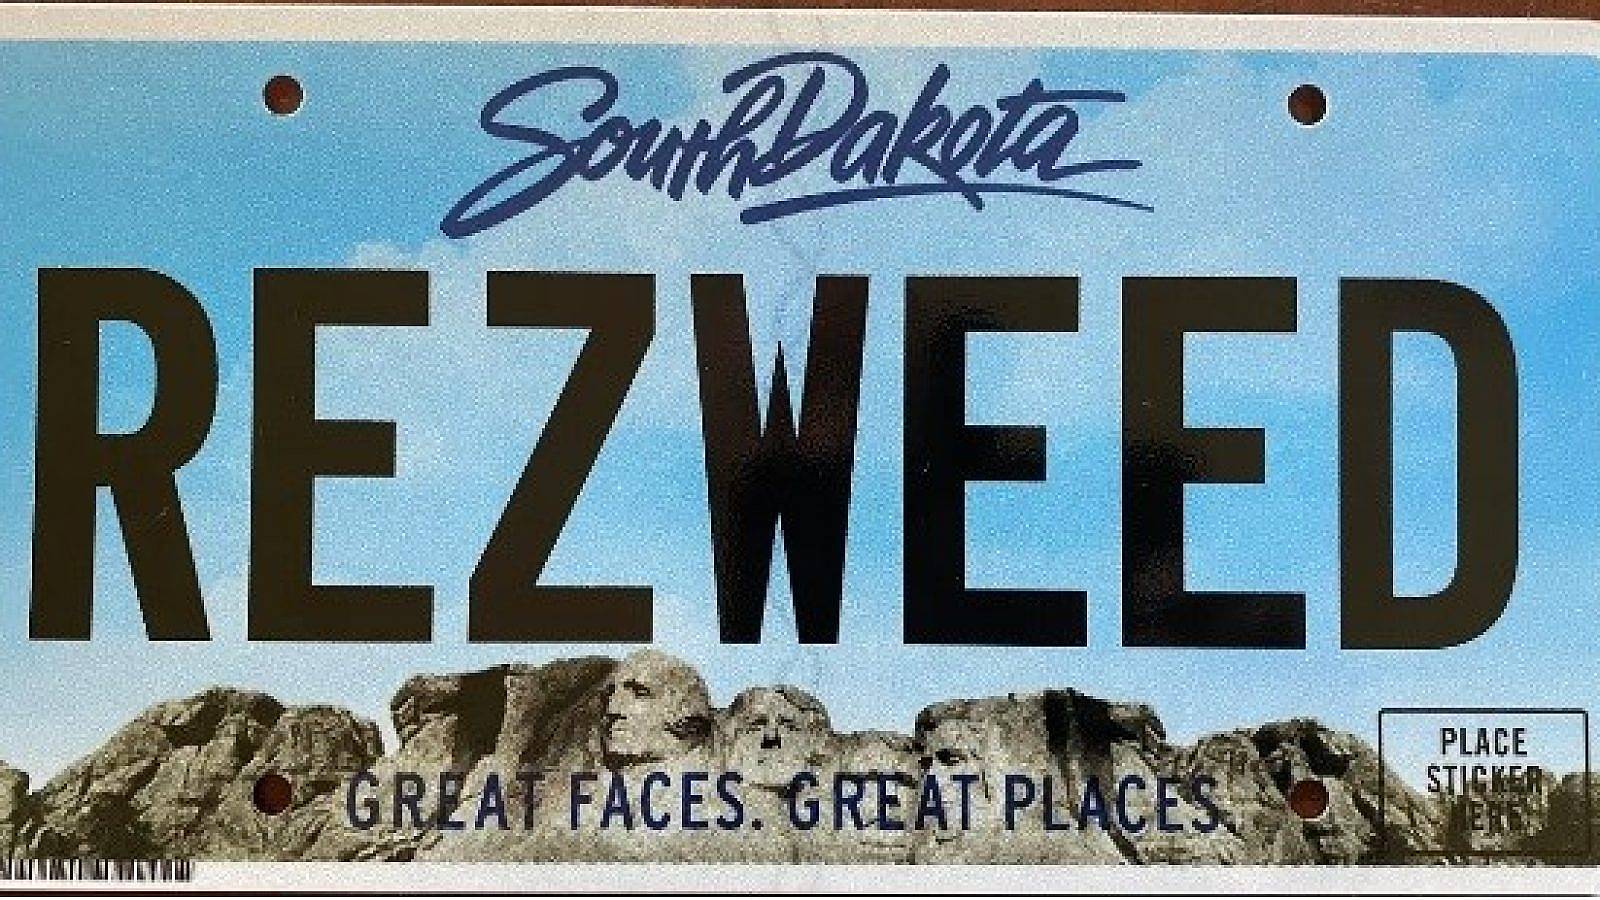 South Dakota license plate free speech legal fees